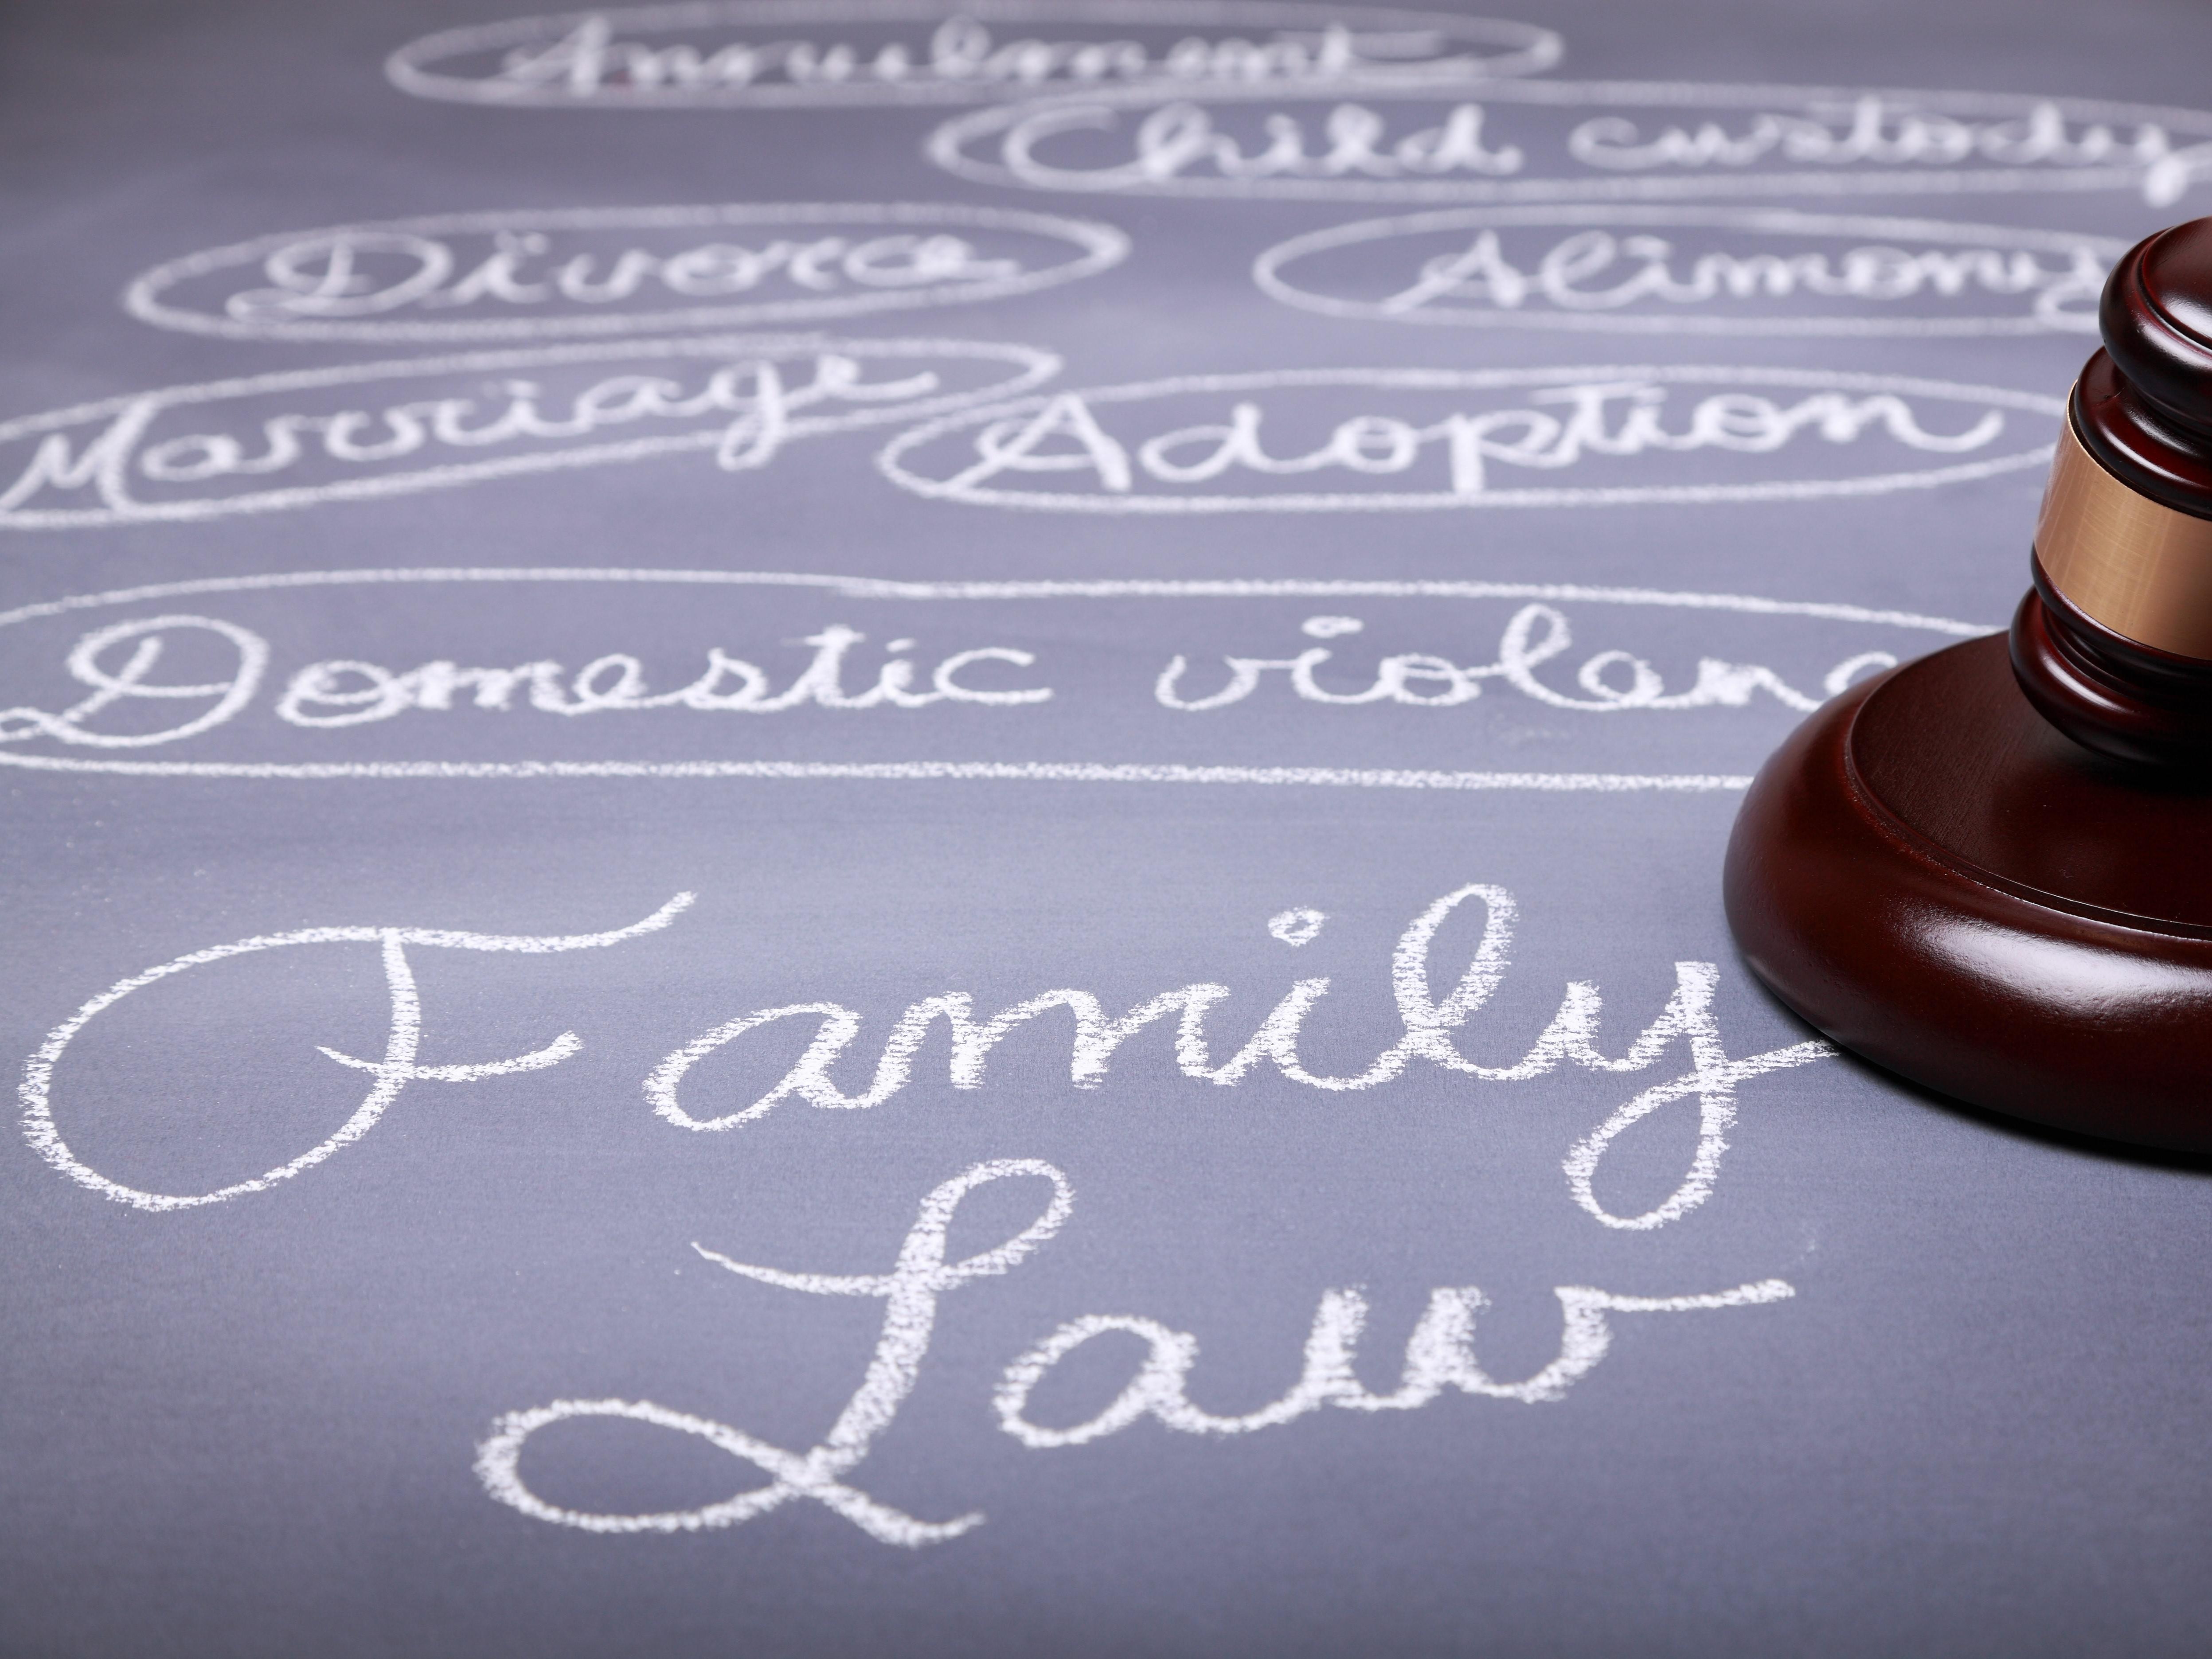 Contact Jarbath PenÌa Law Group PA when there are legal issues facing your family.